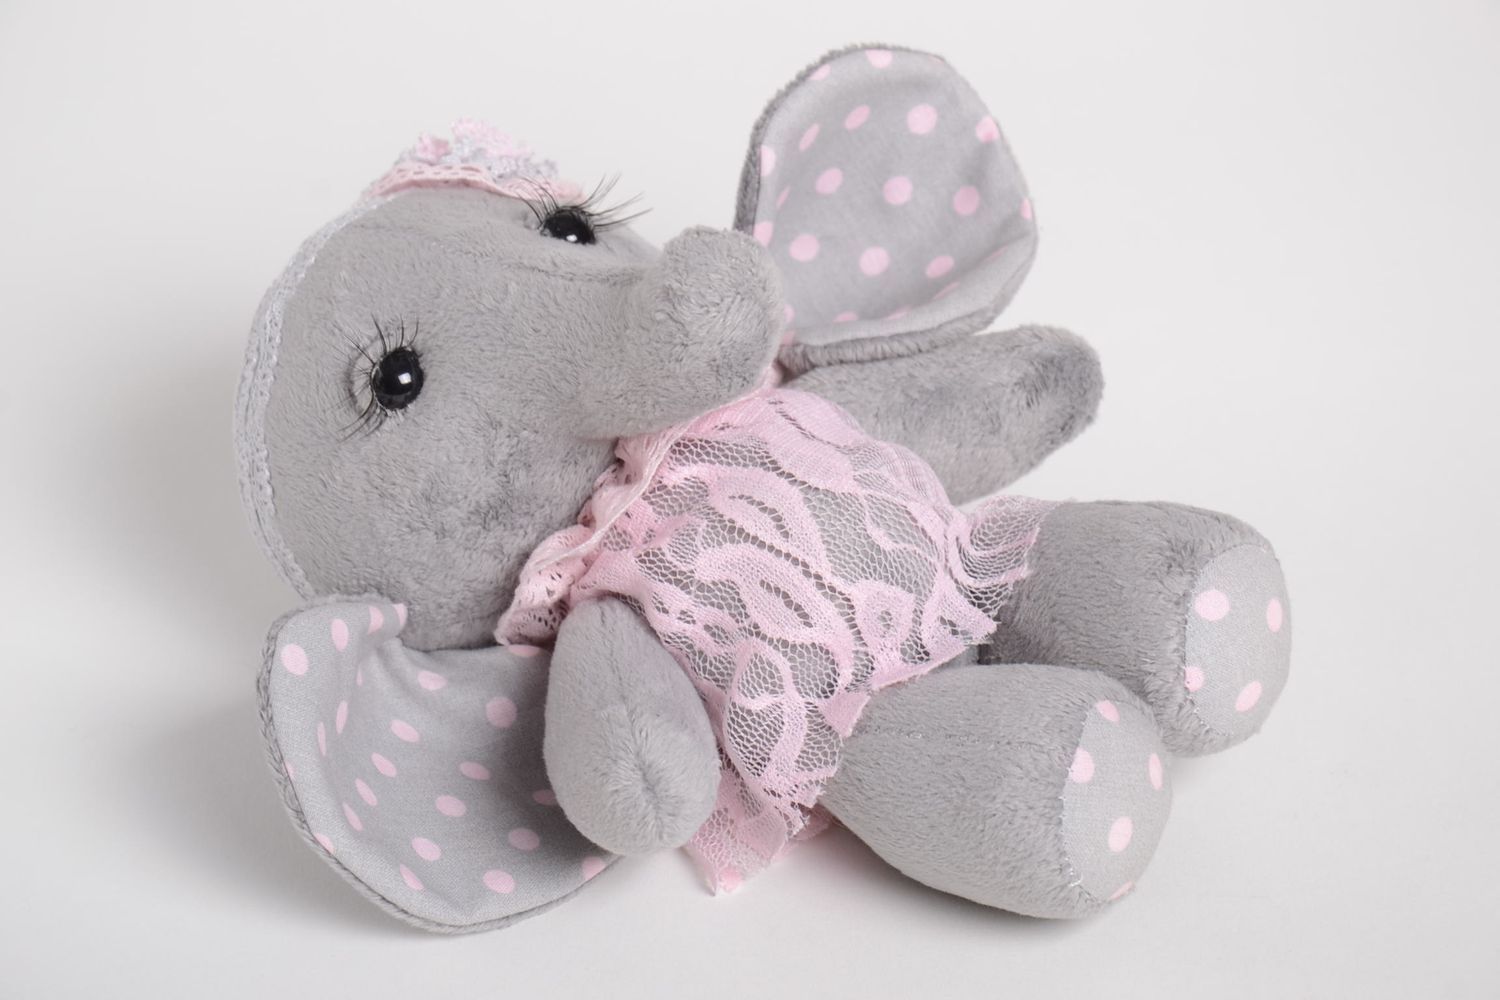 Handmade stuffed toy elephant soft doll for babies interior decor ideas photo 5